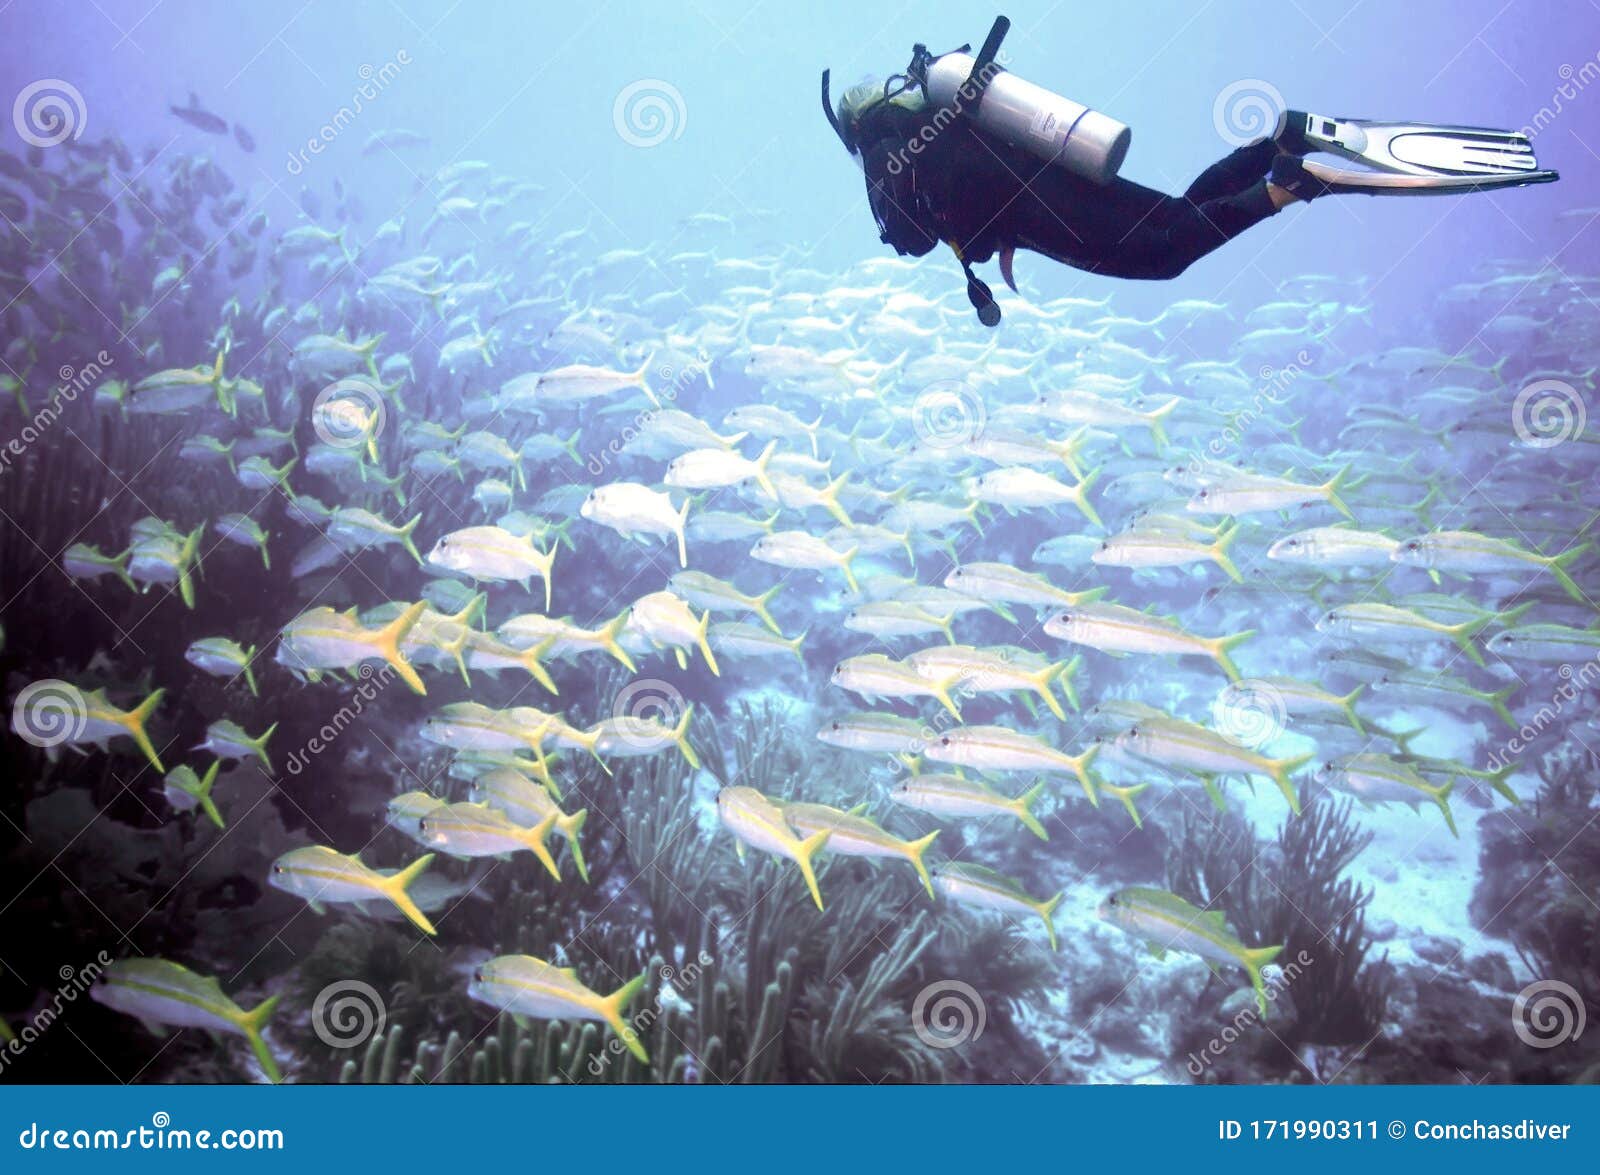 a diver floats above schooling goatfish off key largo, fl